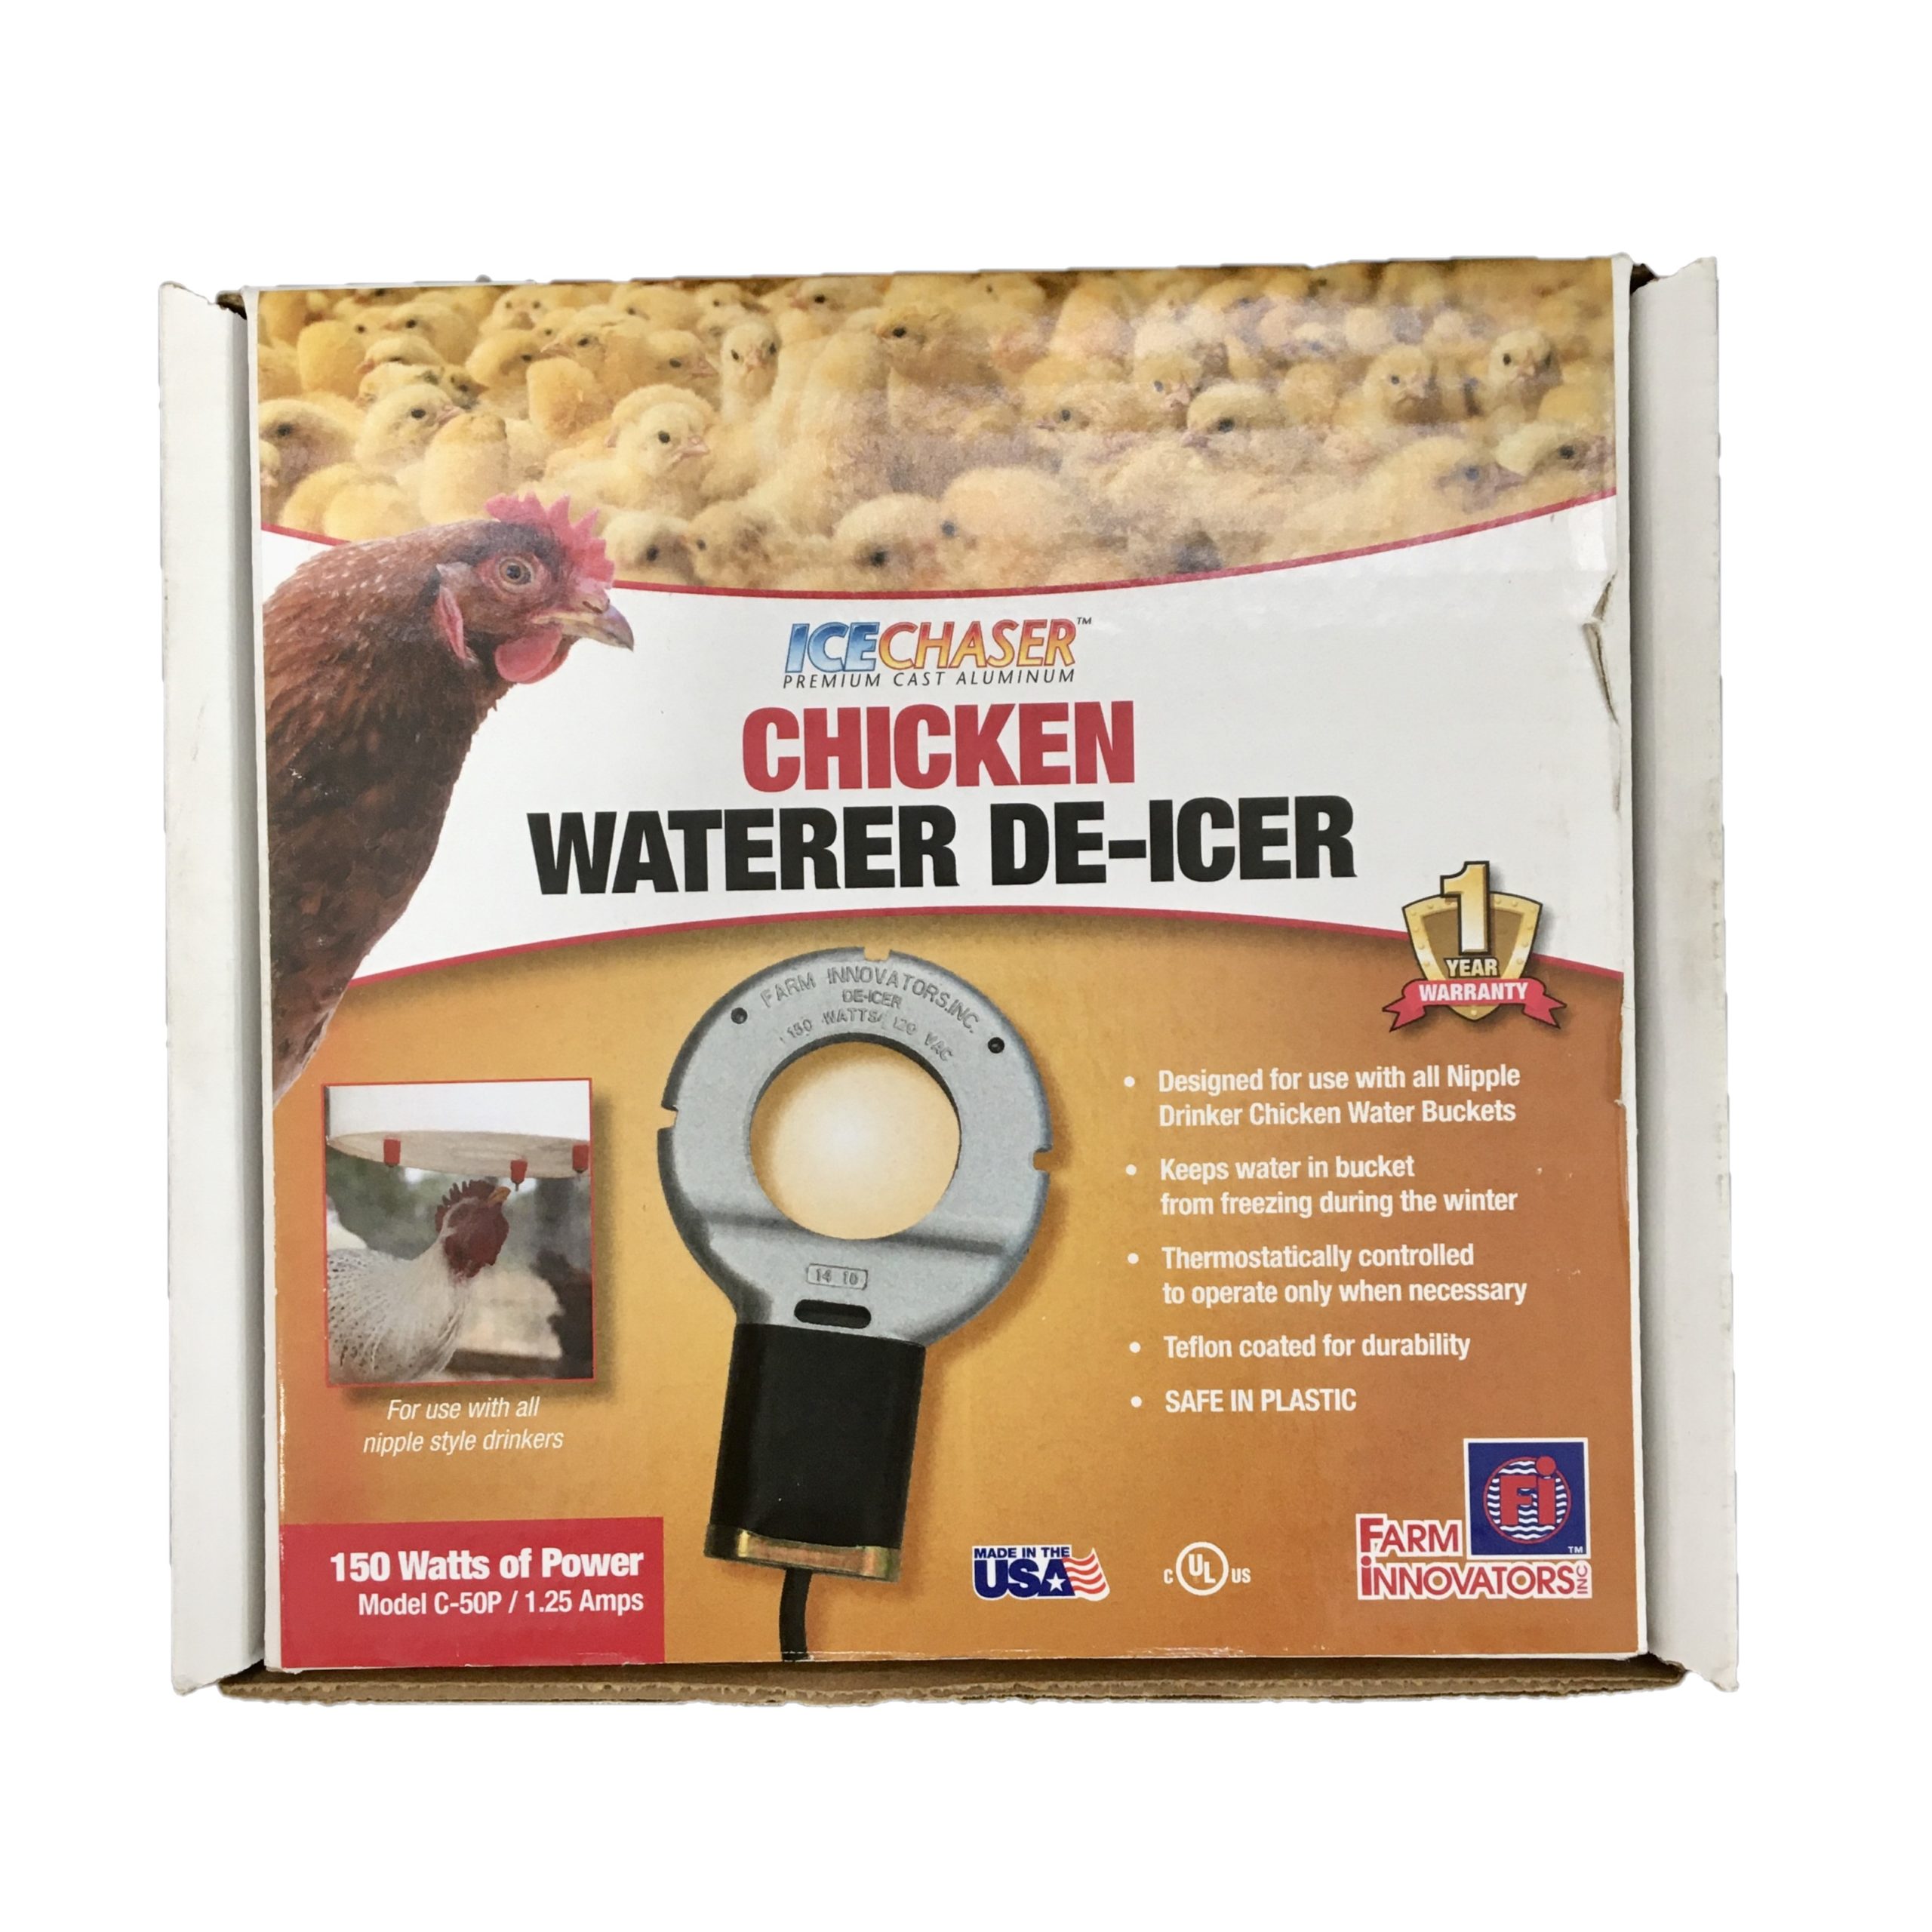 Chicken Waterer De-Icer